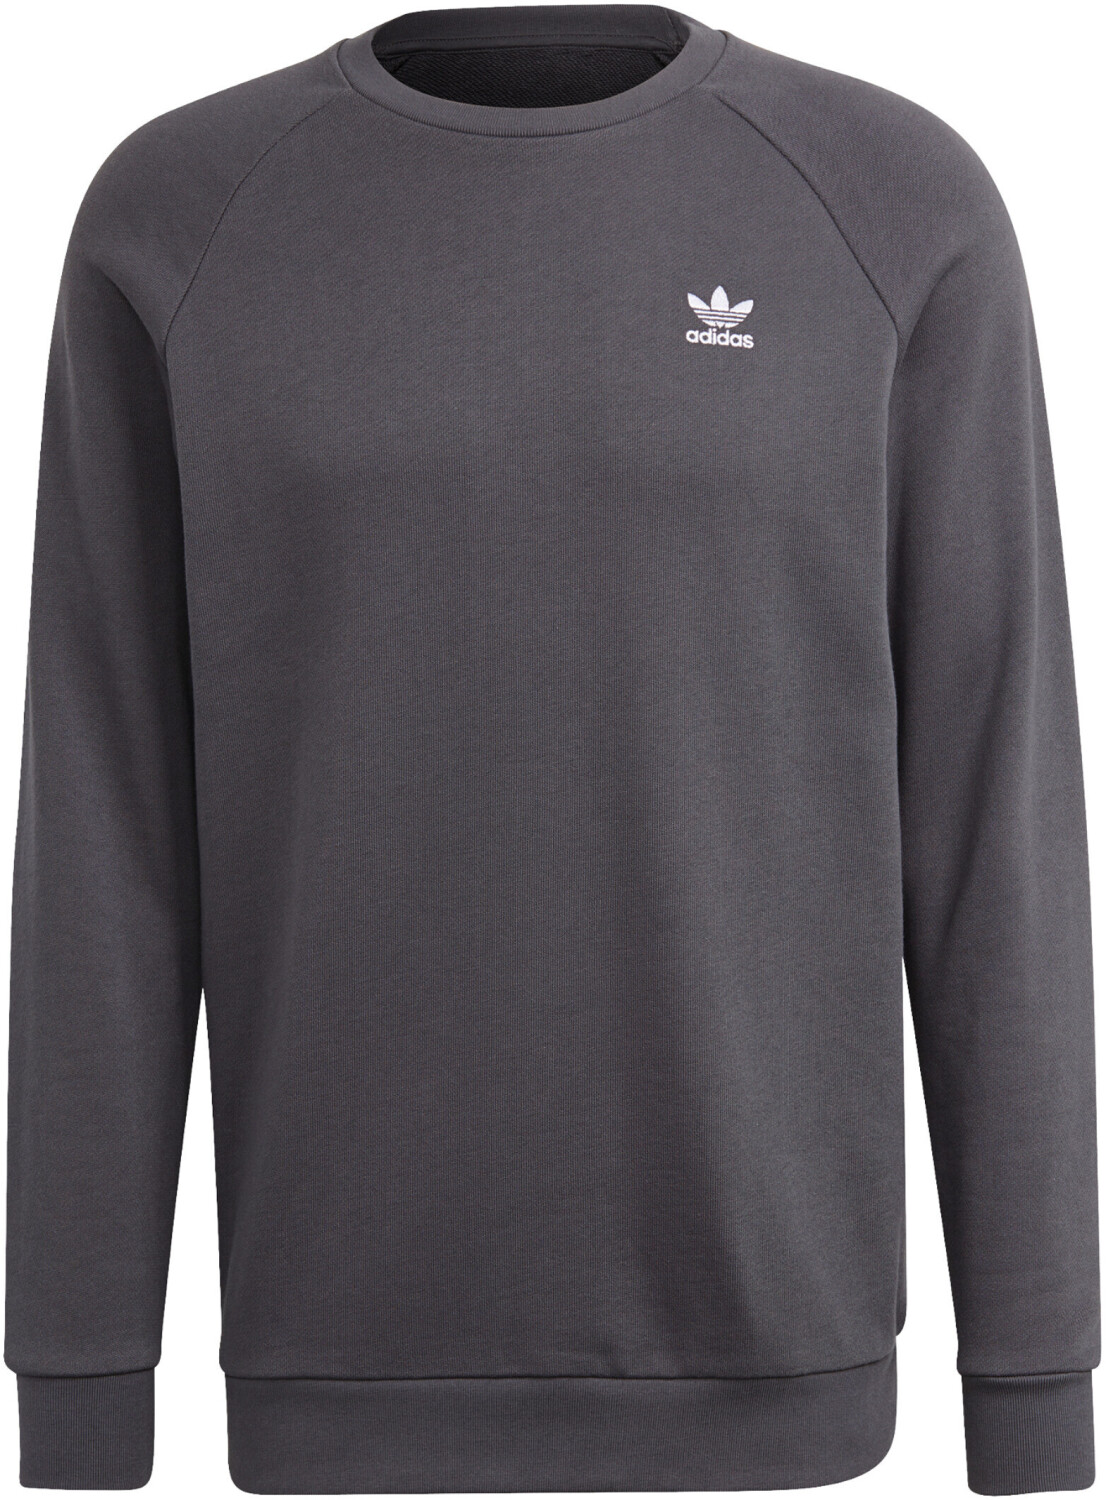 Adidas LOUNGEWEAR Trefoil Essentials Sweatshirt grey five